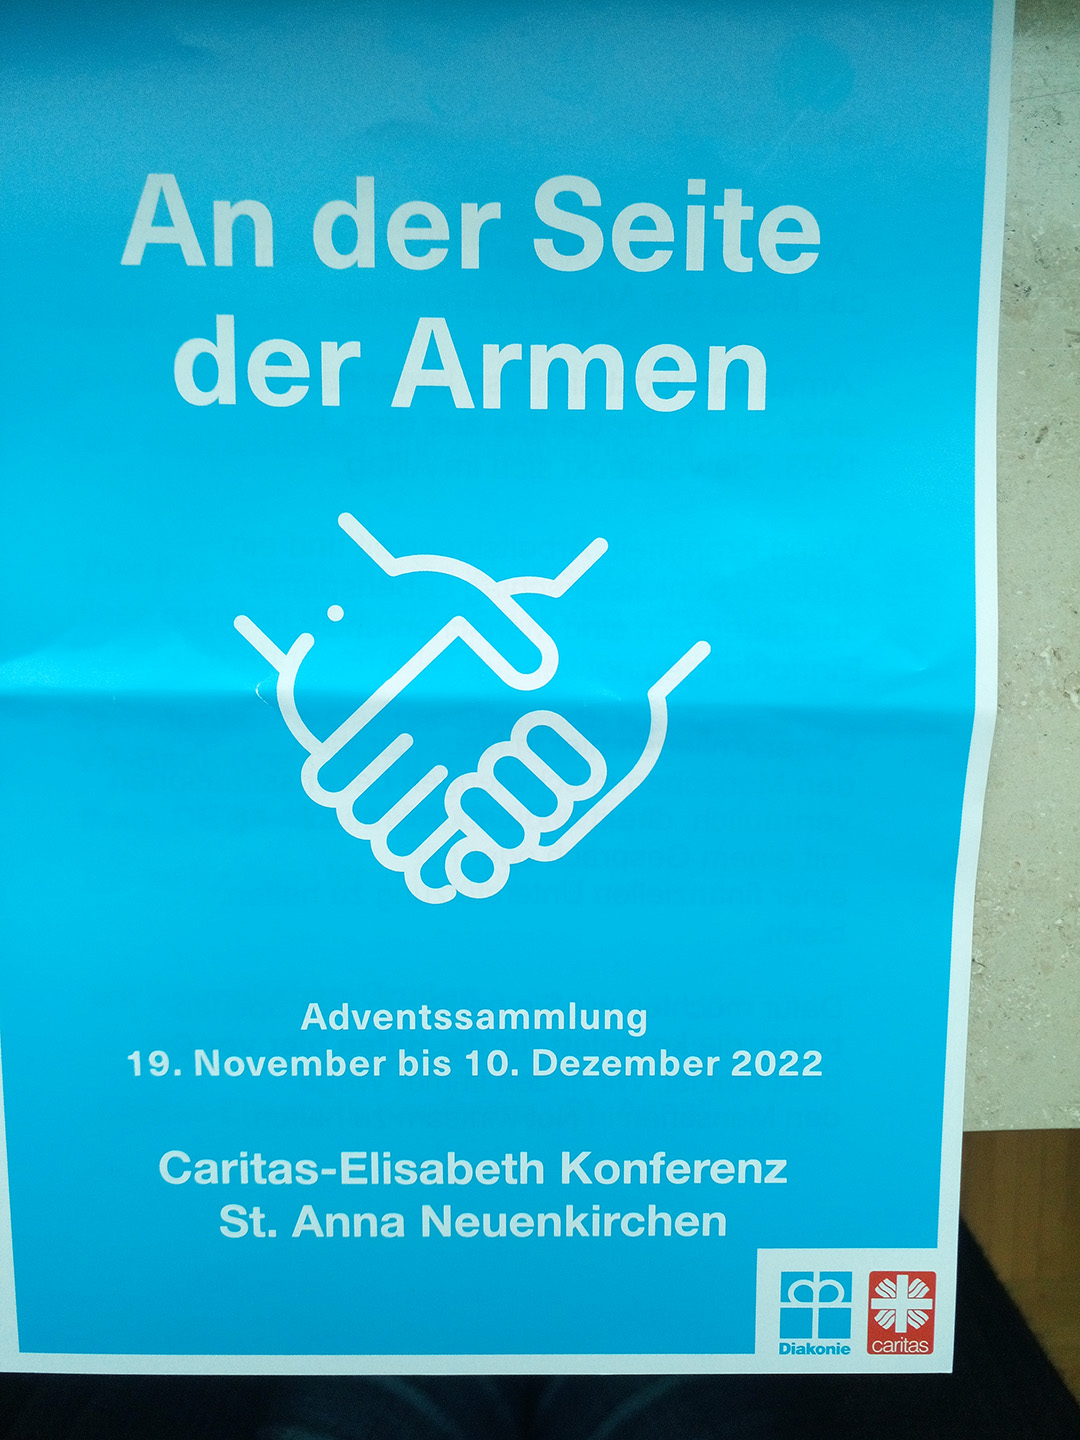 Adventssammlung-Caritas.png